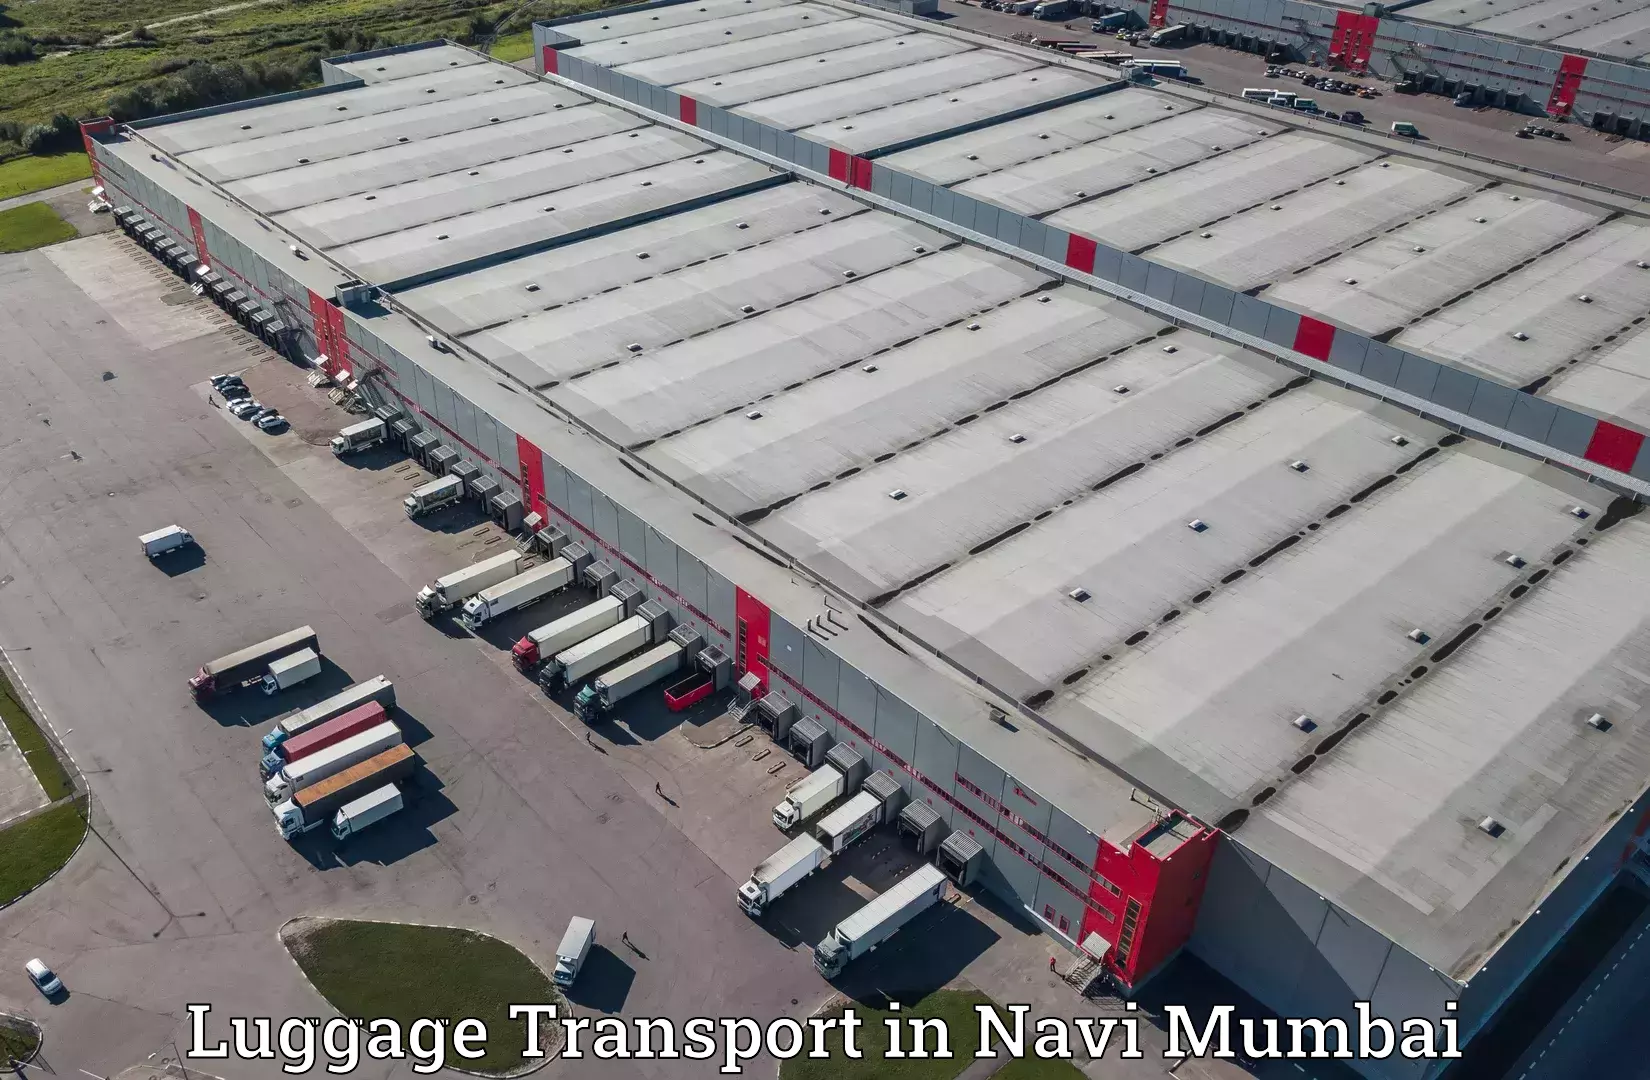 Luggage transport deals in Navi Mumbai